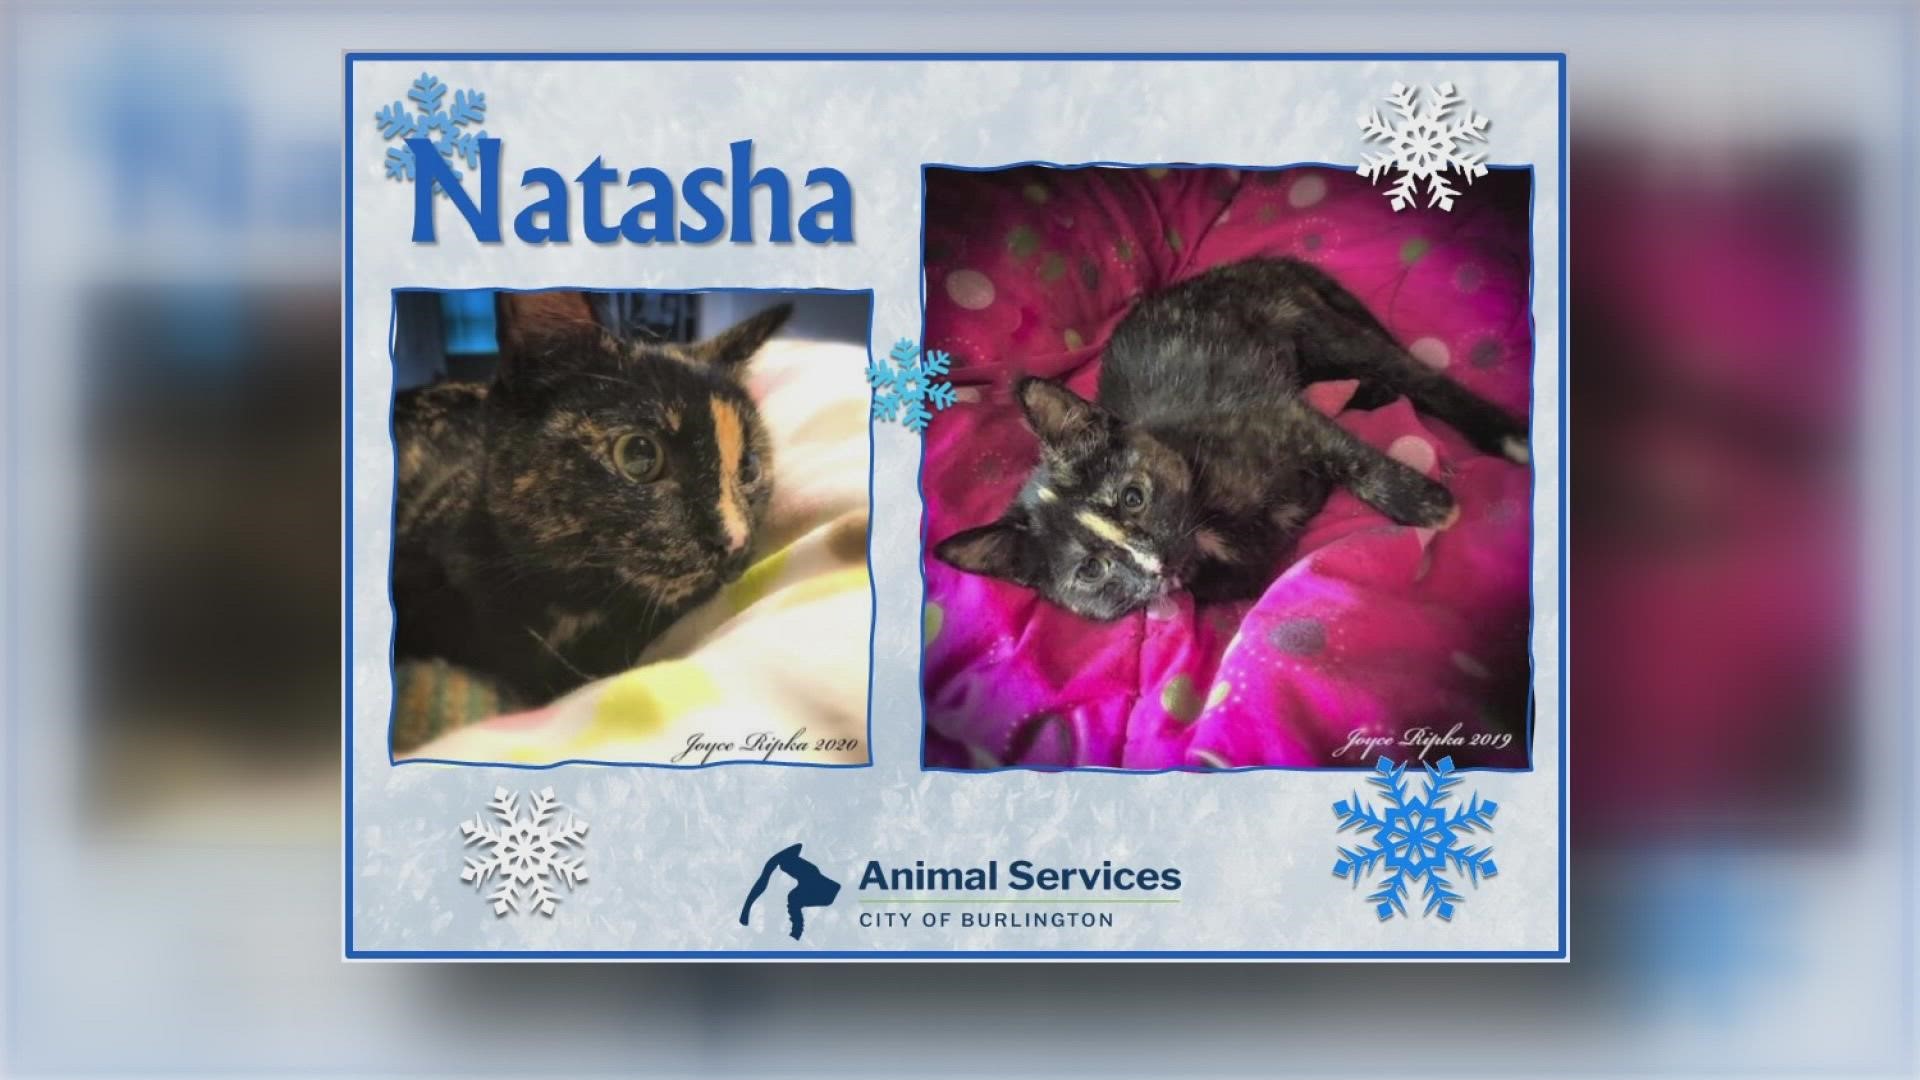 Let’s get Natasha adopted!